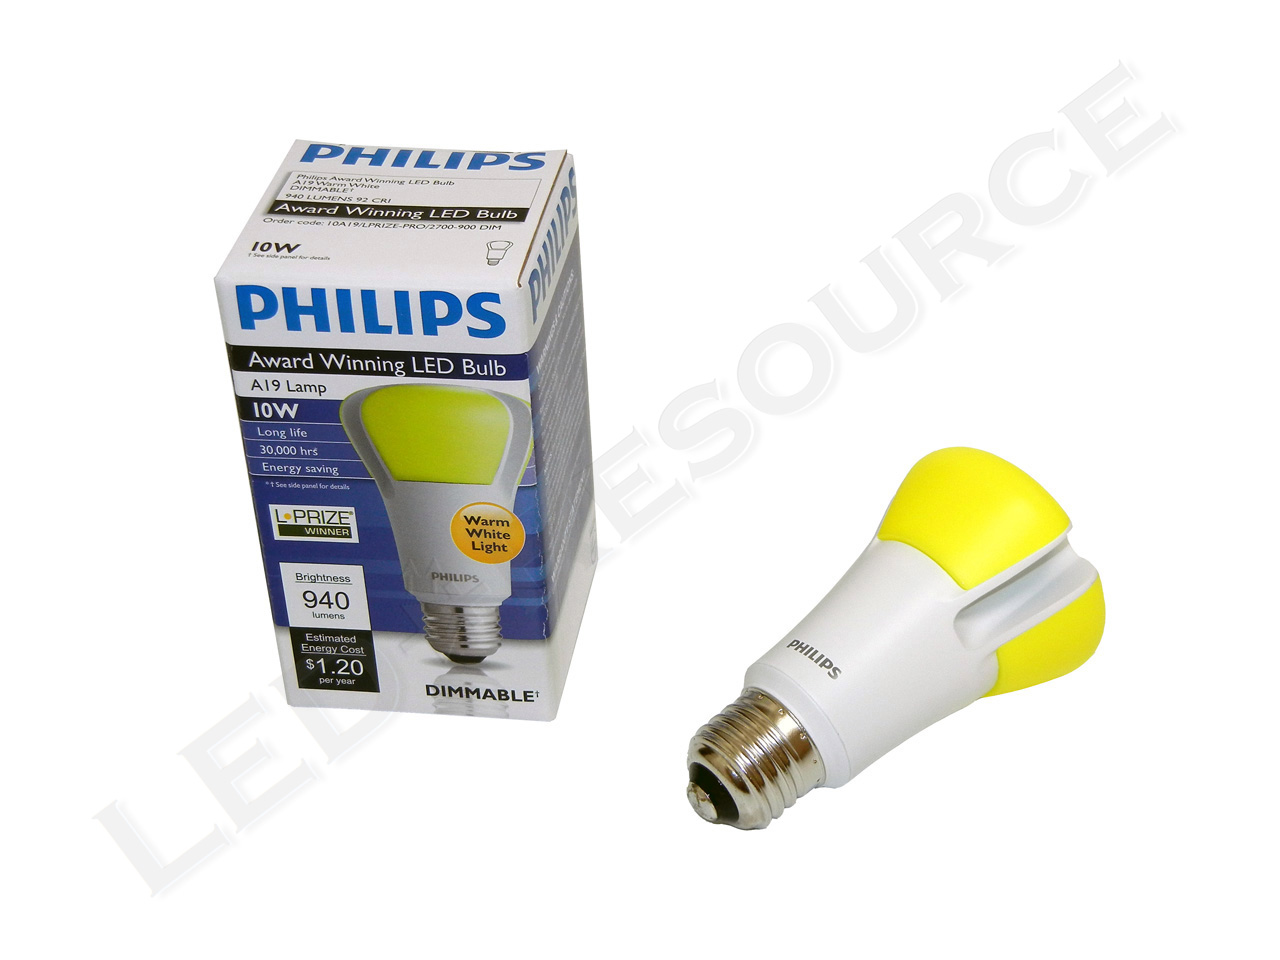 betrouwbaarheid Vervoer Glimmend Philips L-Prize Award Winning LED Bulb Review - LED-Resource